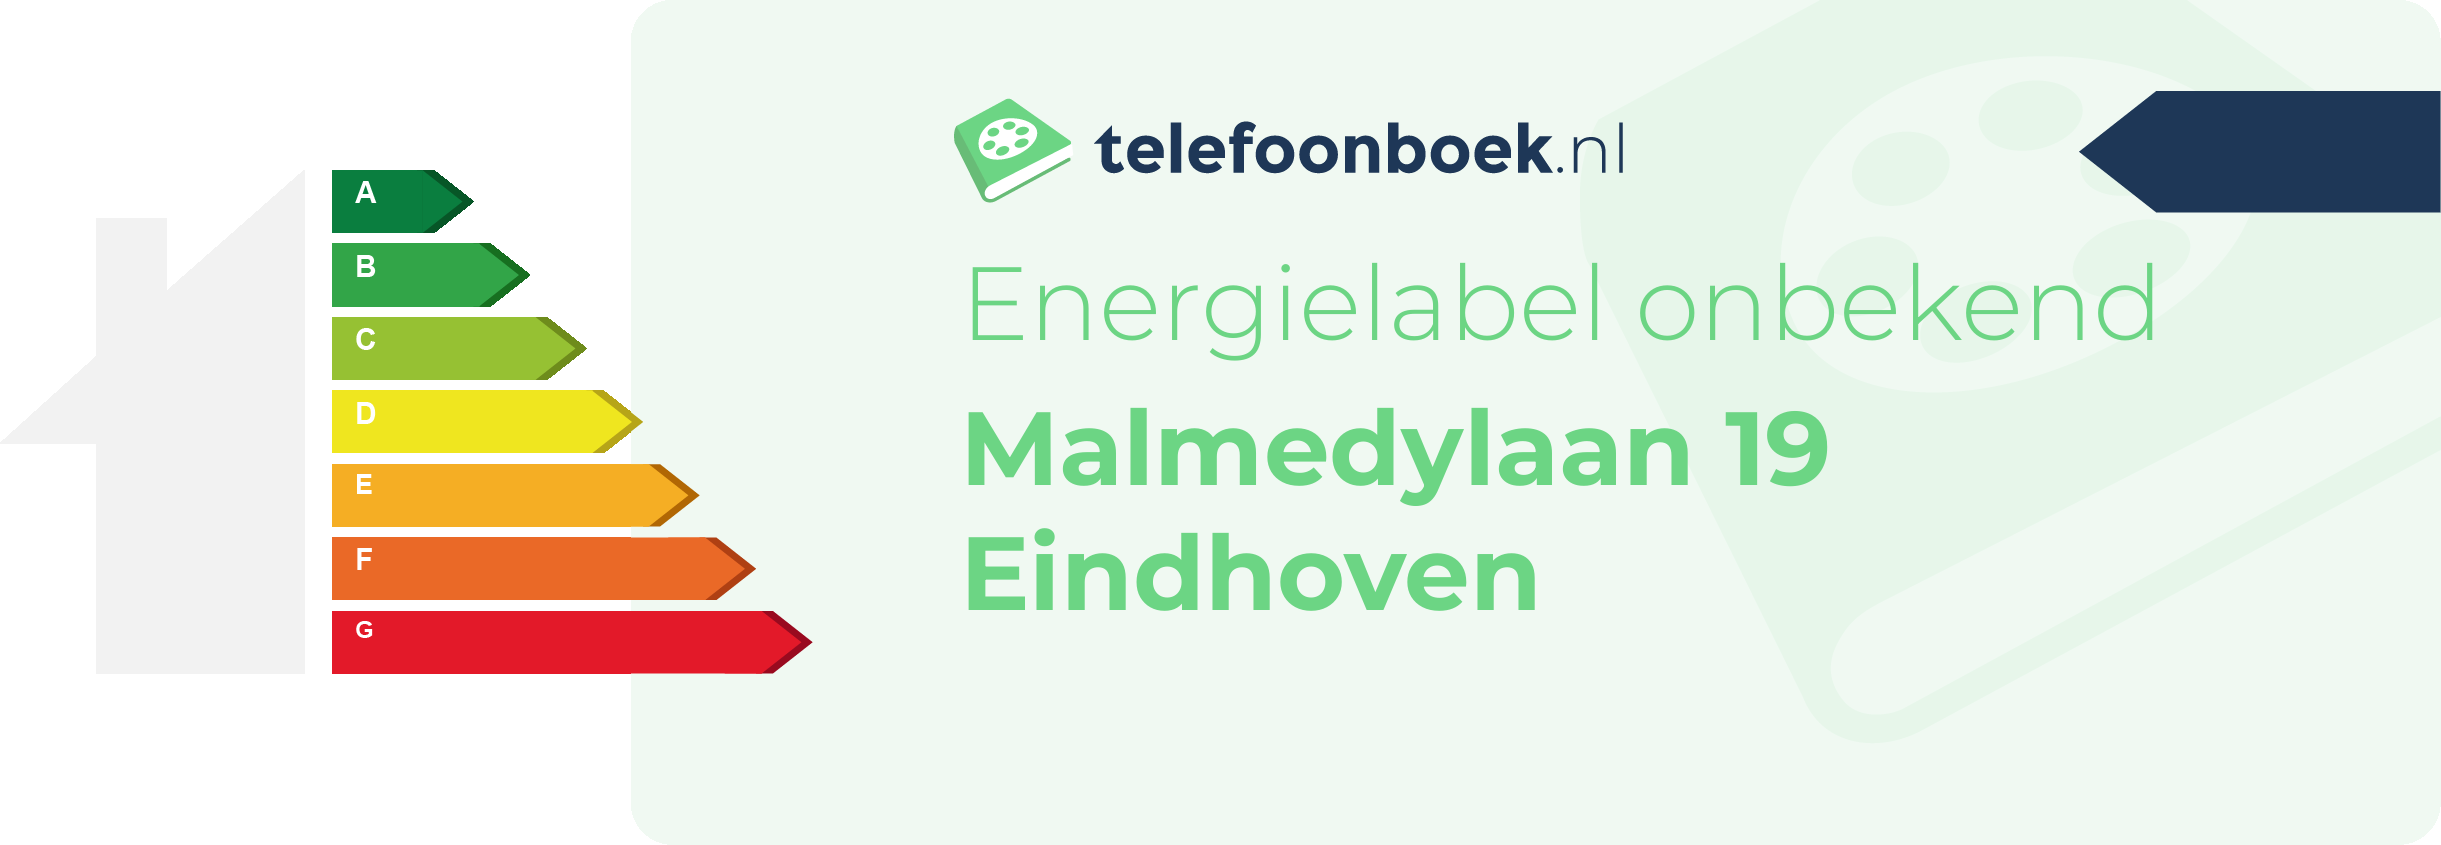 Energielabel Malmedylaan 19 Eindhoven